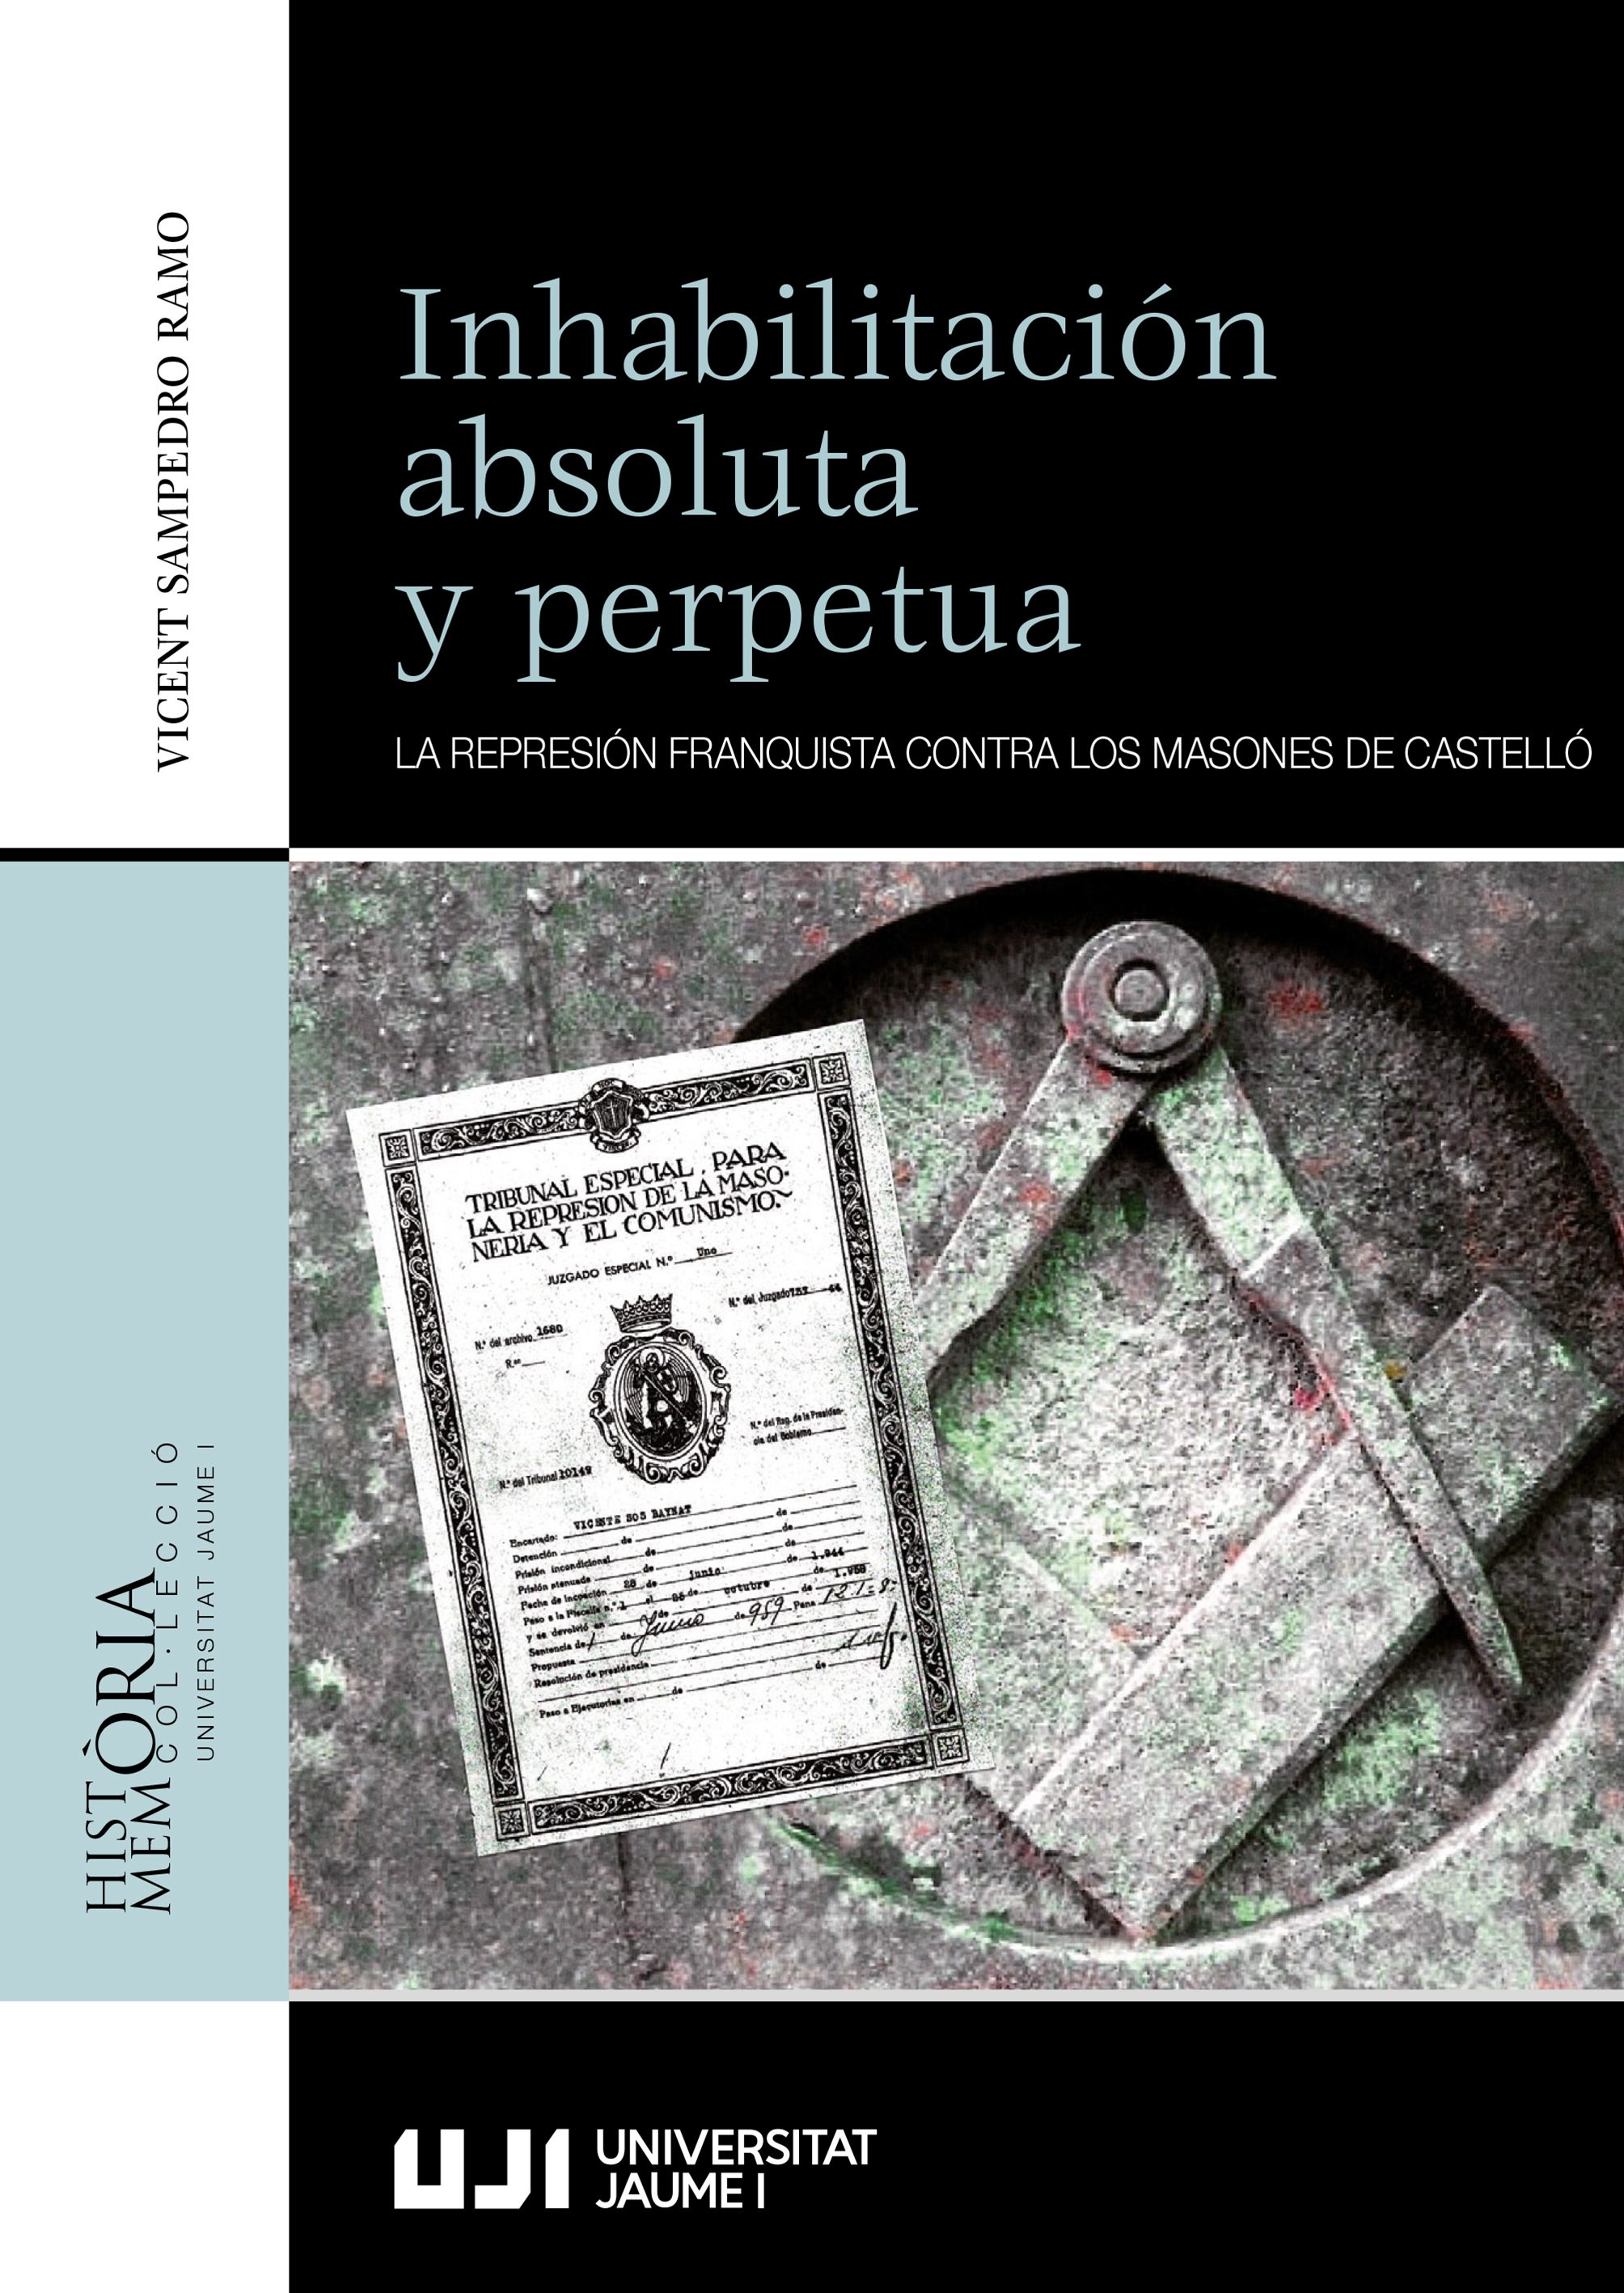 InhabilitaciÃ³n absoluta y perpetua. La represiÃ³n franquista contra los masones de CastellÃ³.